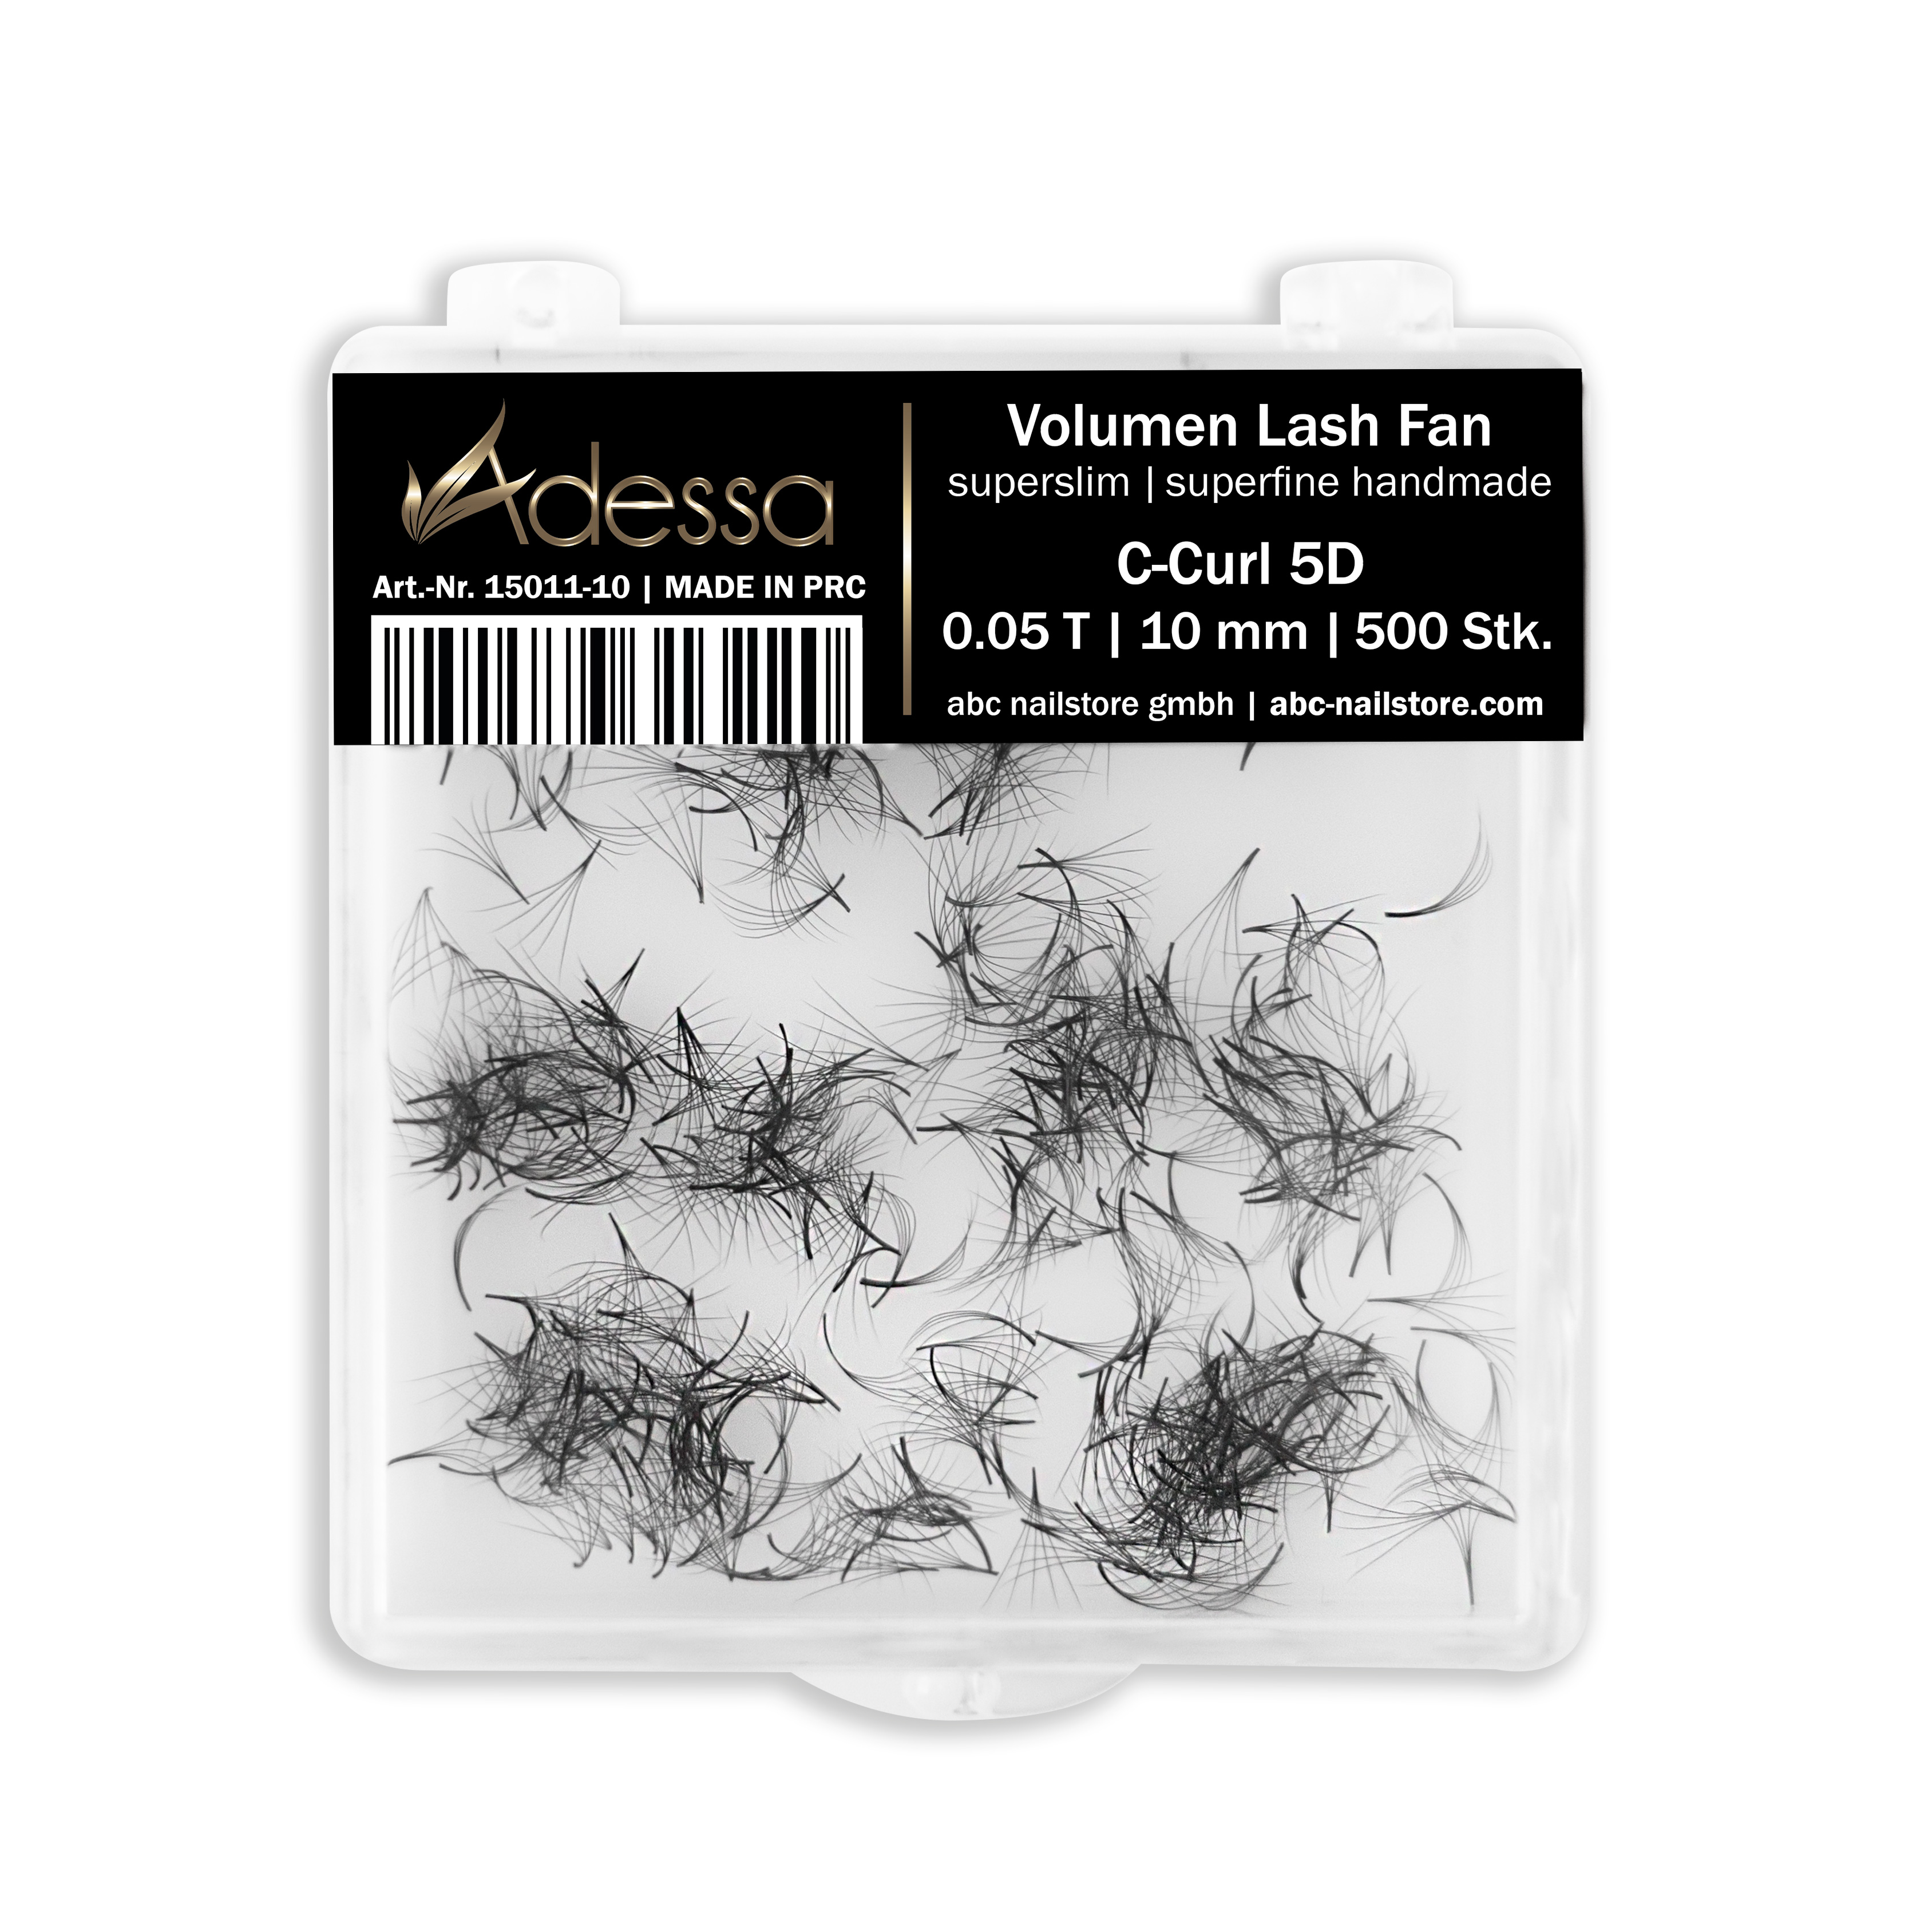 Adessa Volumen Lash Fan, superslim/superfine handmade, C-Curl, 5D, 0.05, 10mm, 500 Stück